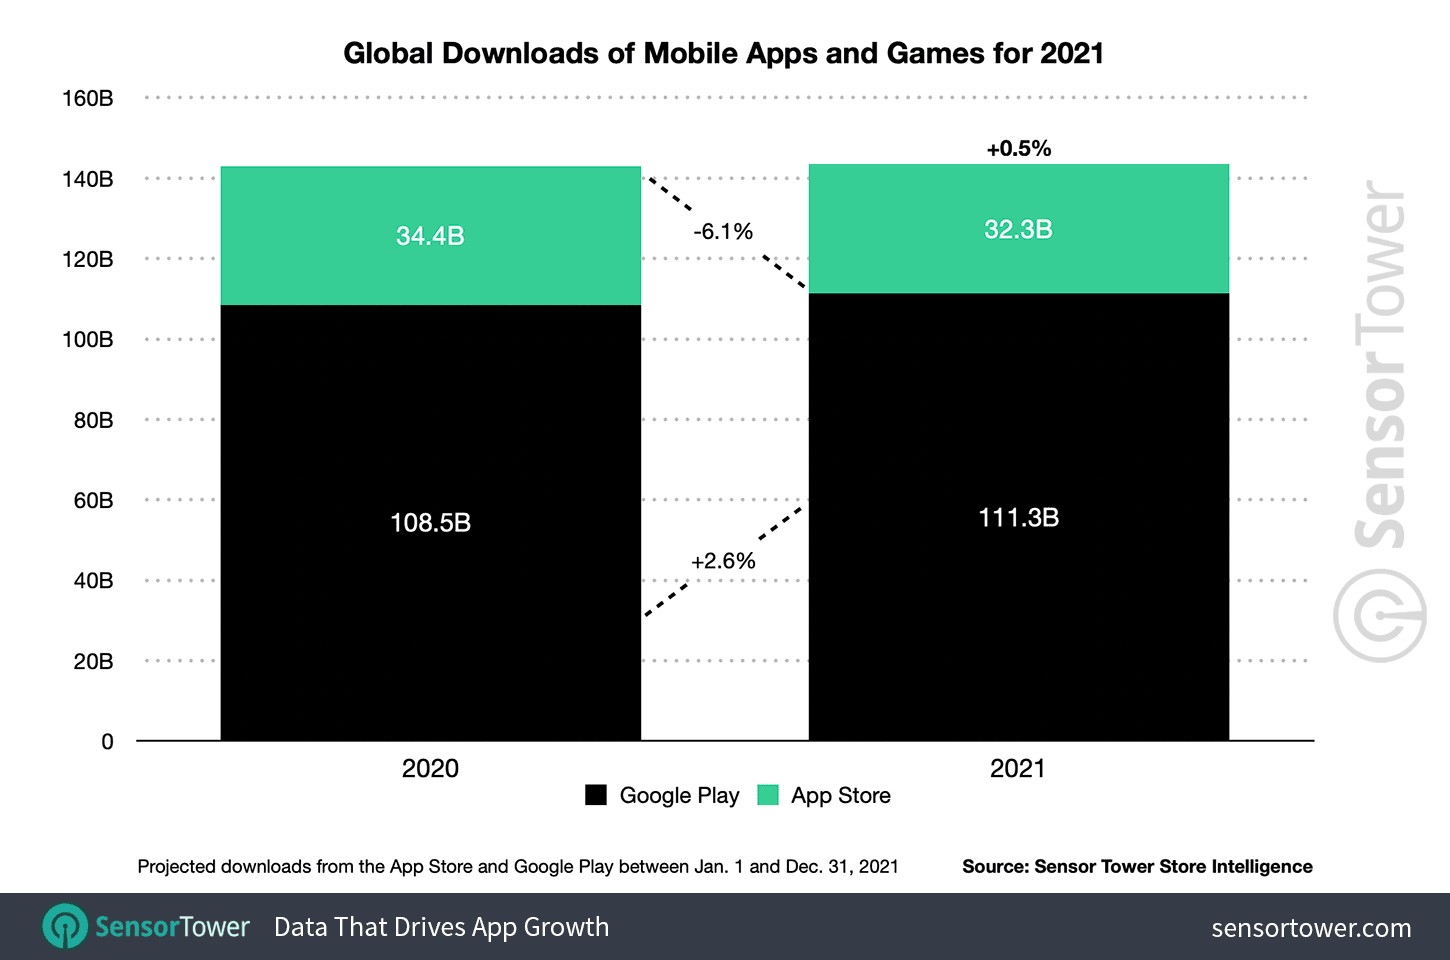 Worldwide app downloads grew 0.5 percent year-over-year to 143.6 billion in 2021.